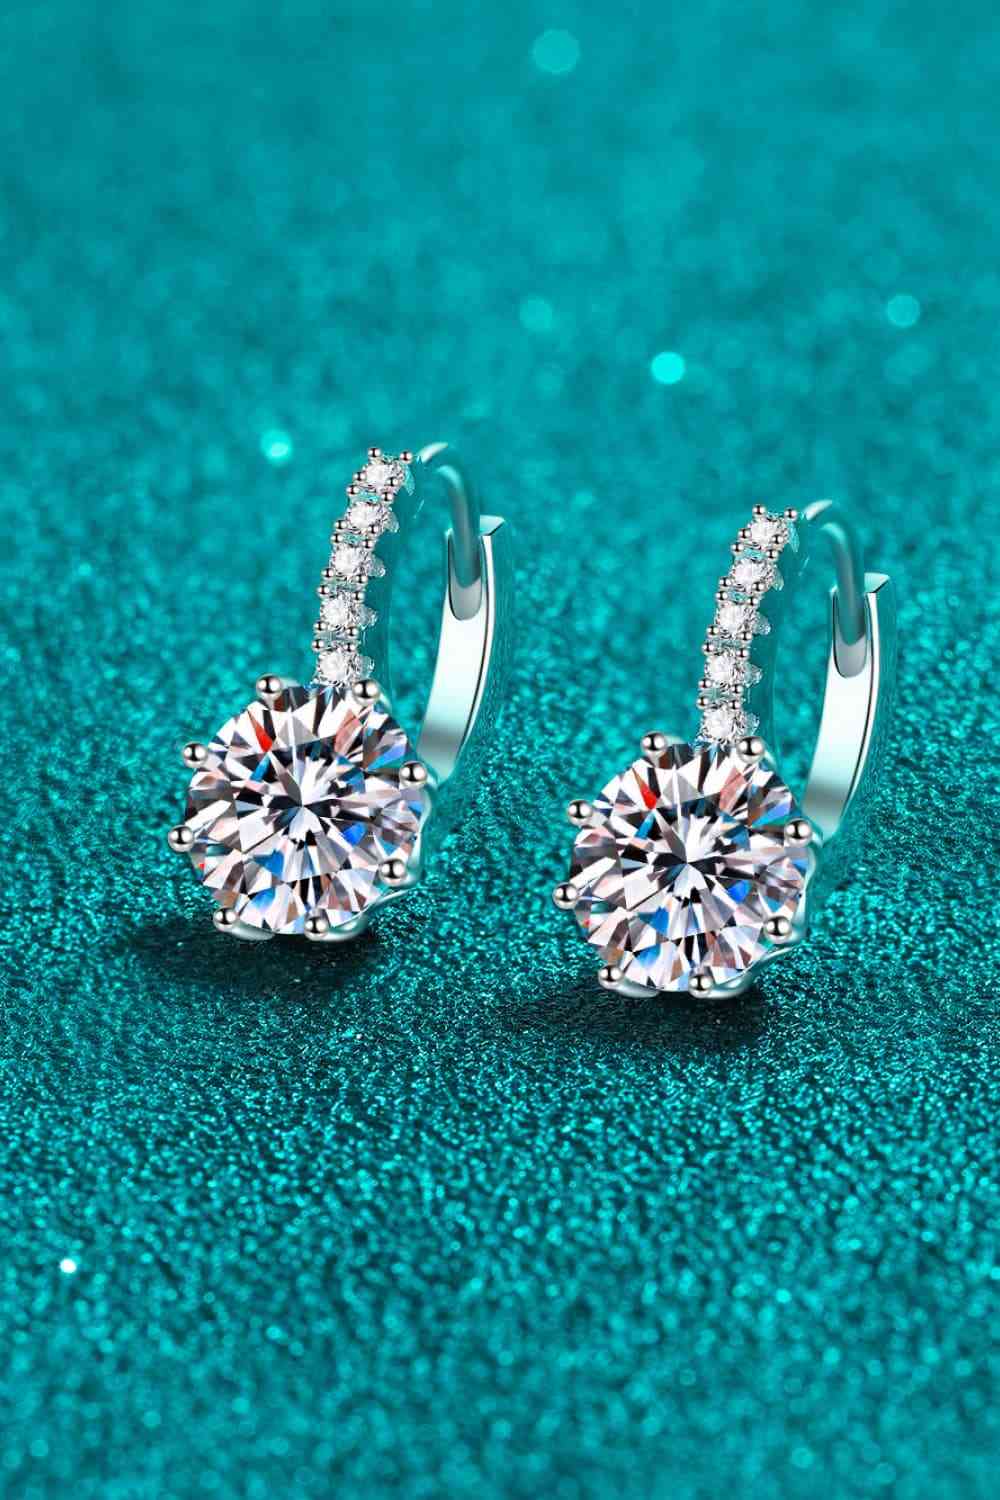 4 Carat Moissanite 925 Sterling Silver Earrings - Tophatter Shopping Deals